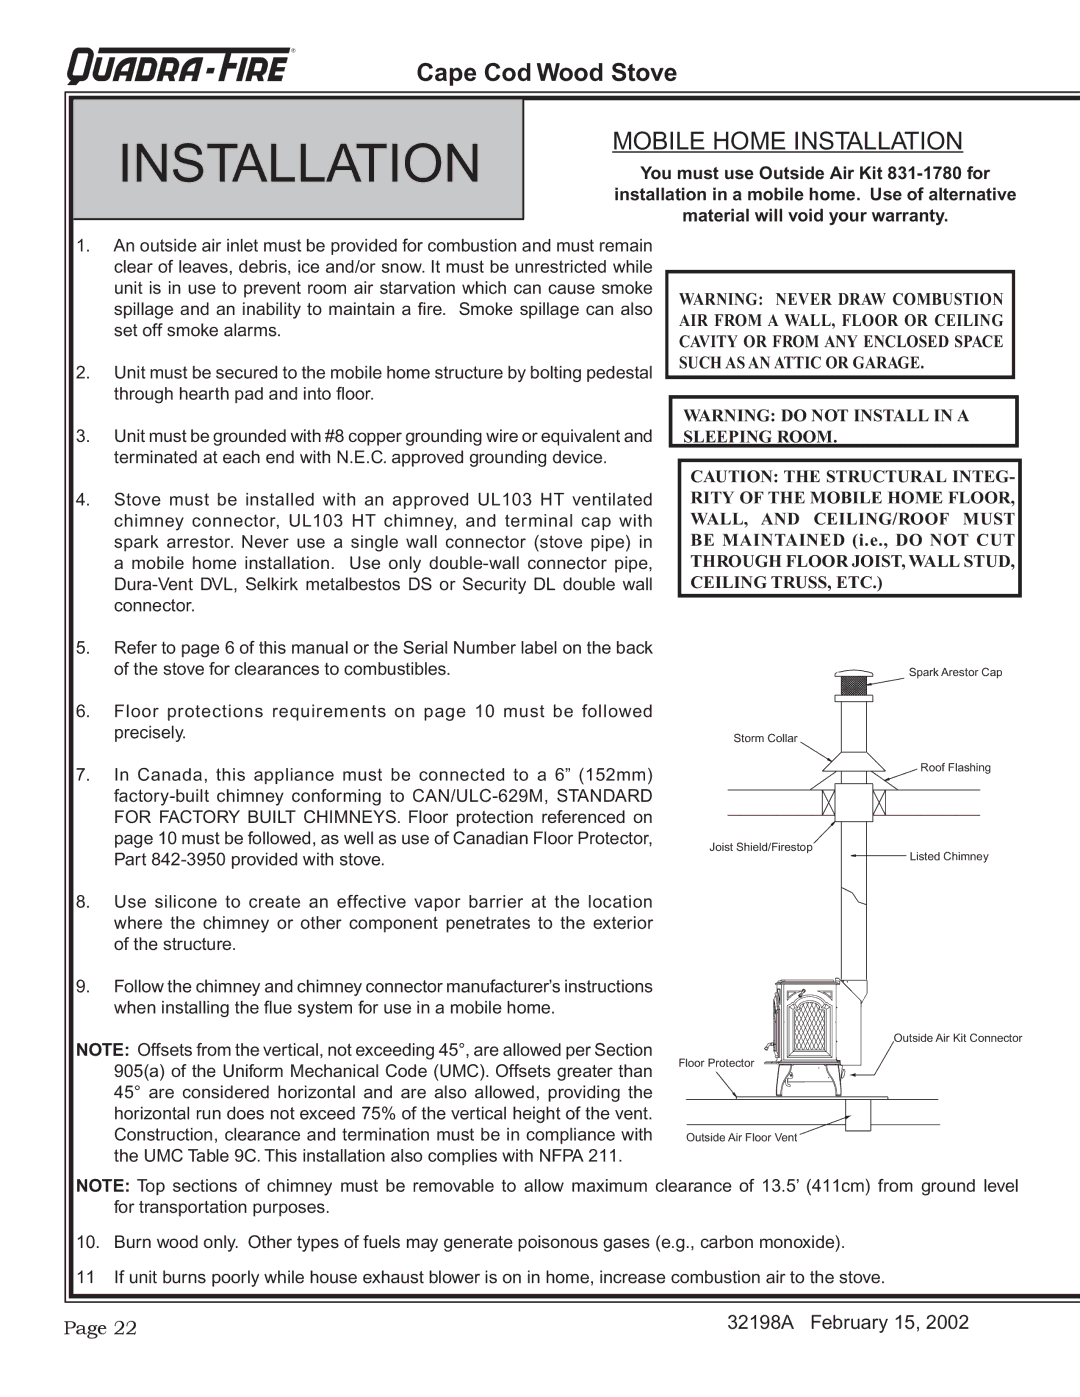 Quadra-Fire 32198A installation instructions Mobile Home Installation 